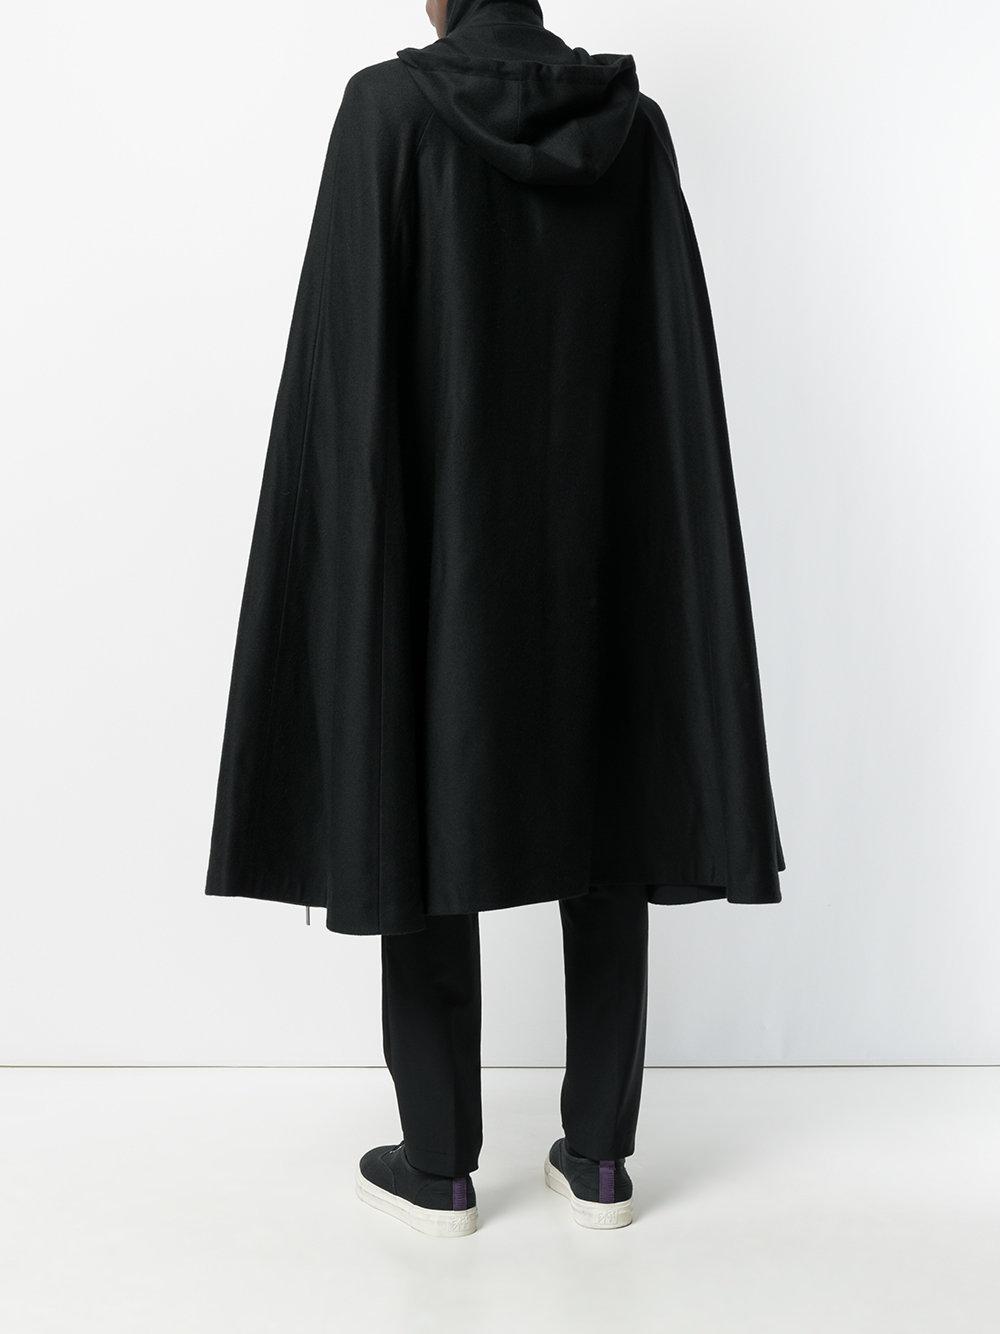 Dior Homme Wool Oversized Cape Coat in Black for Men - Lyst